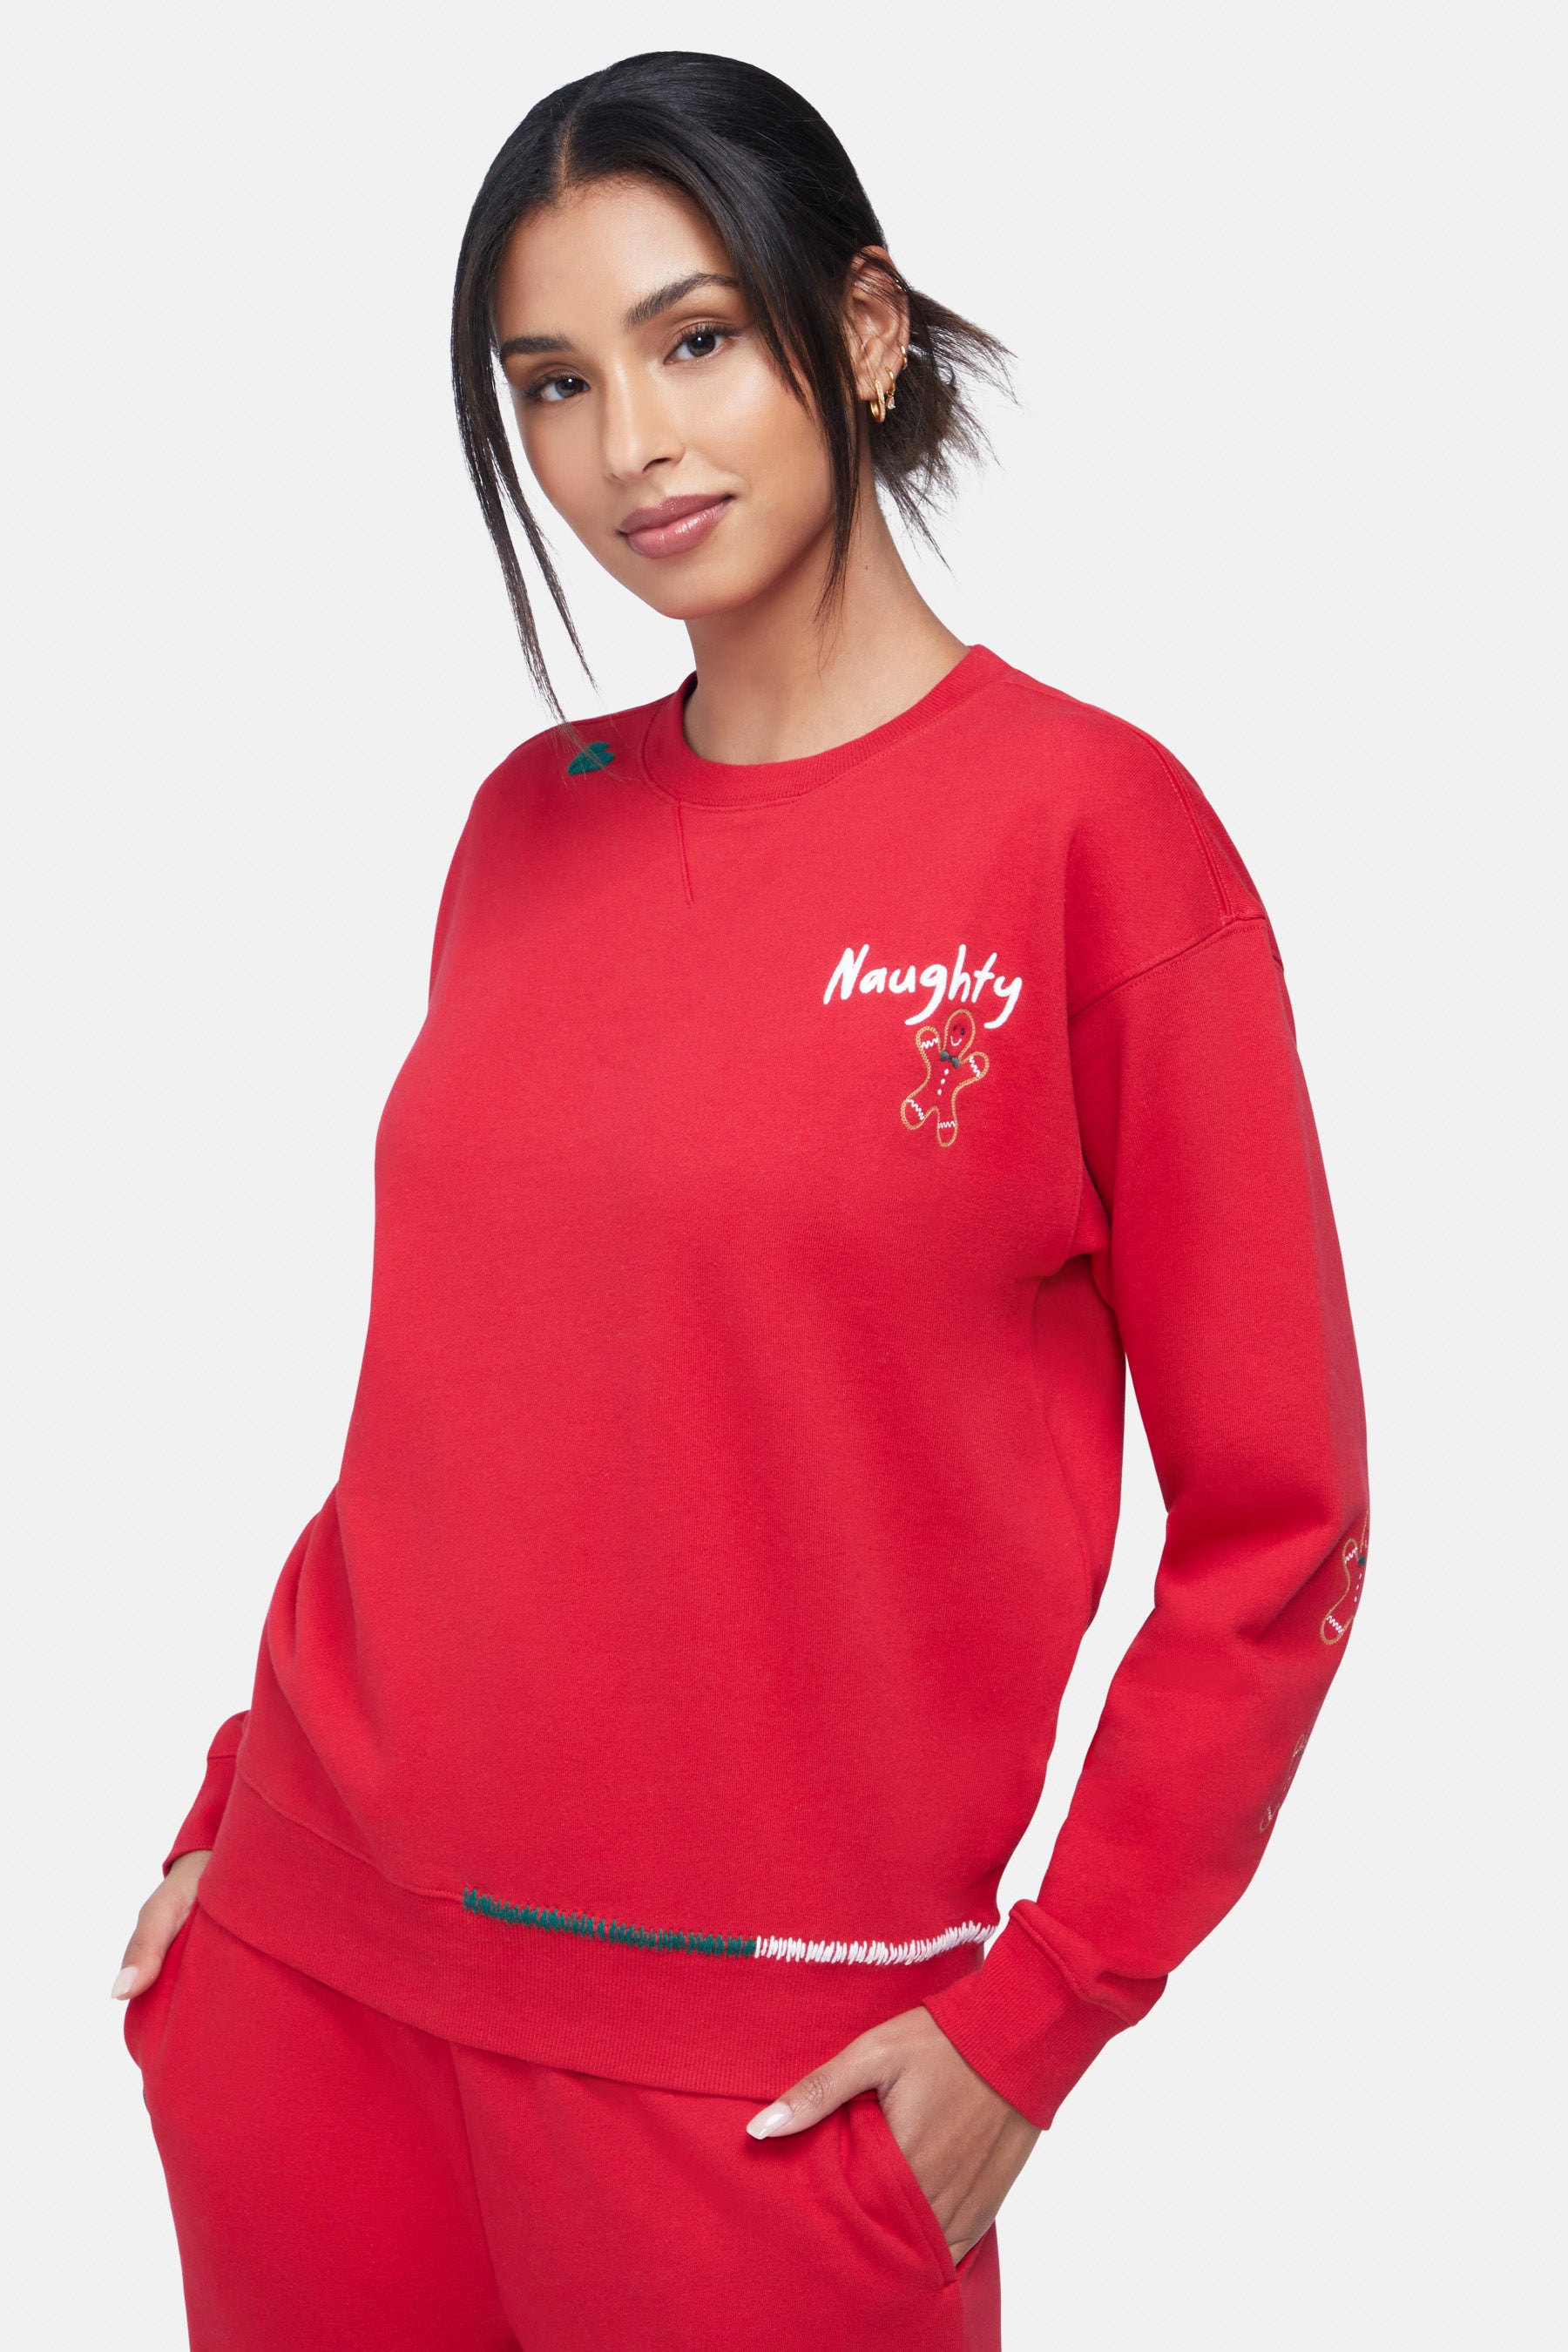 Women's Red Sweatshirts & Sweatpants